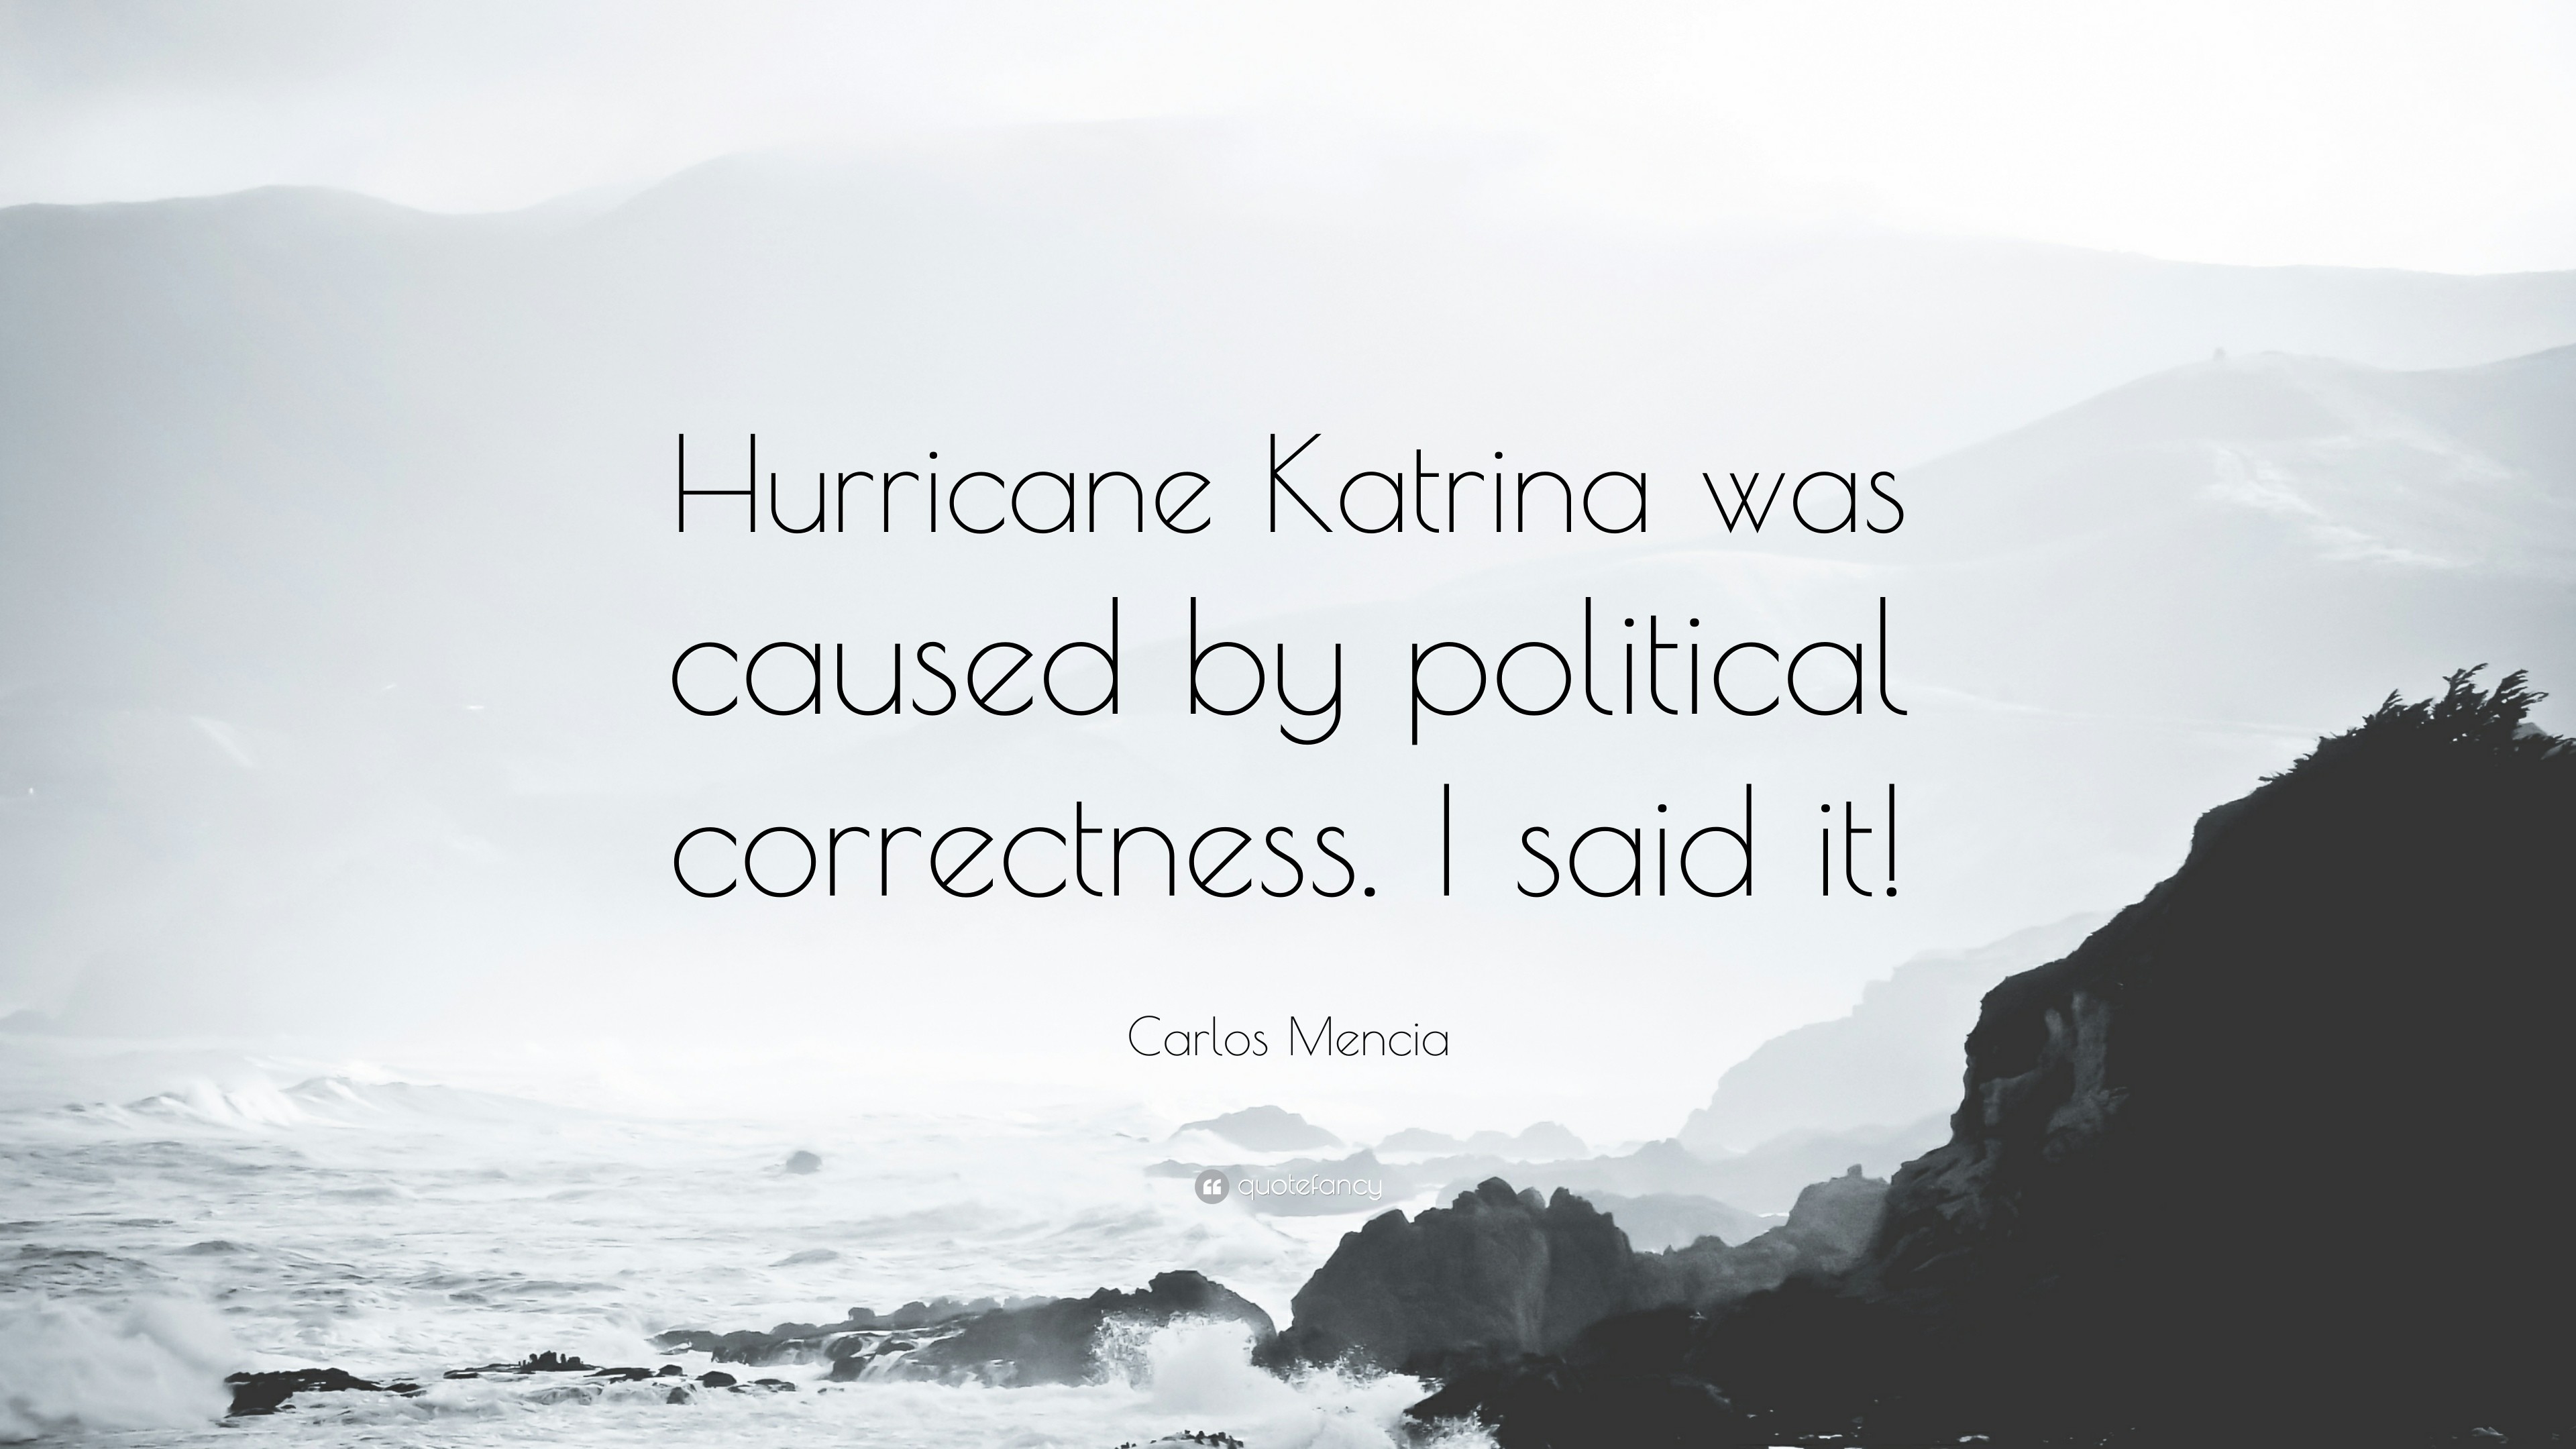 3840x2160 Carlos Mencia Quote: “Hurricane Katrina was caused by political  correctness. I said it